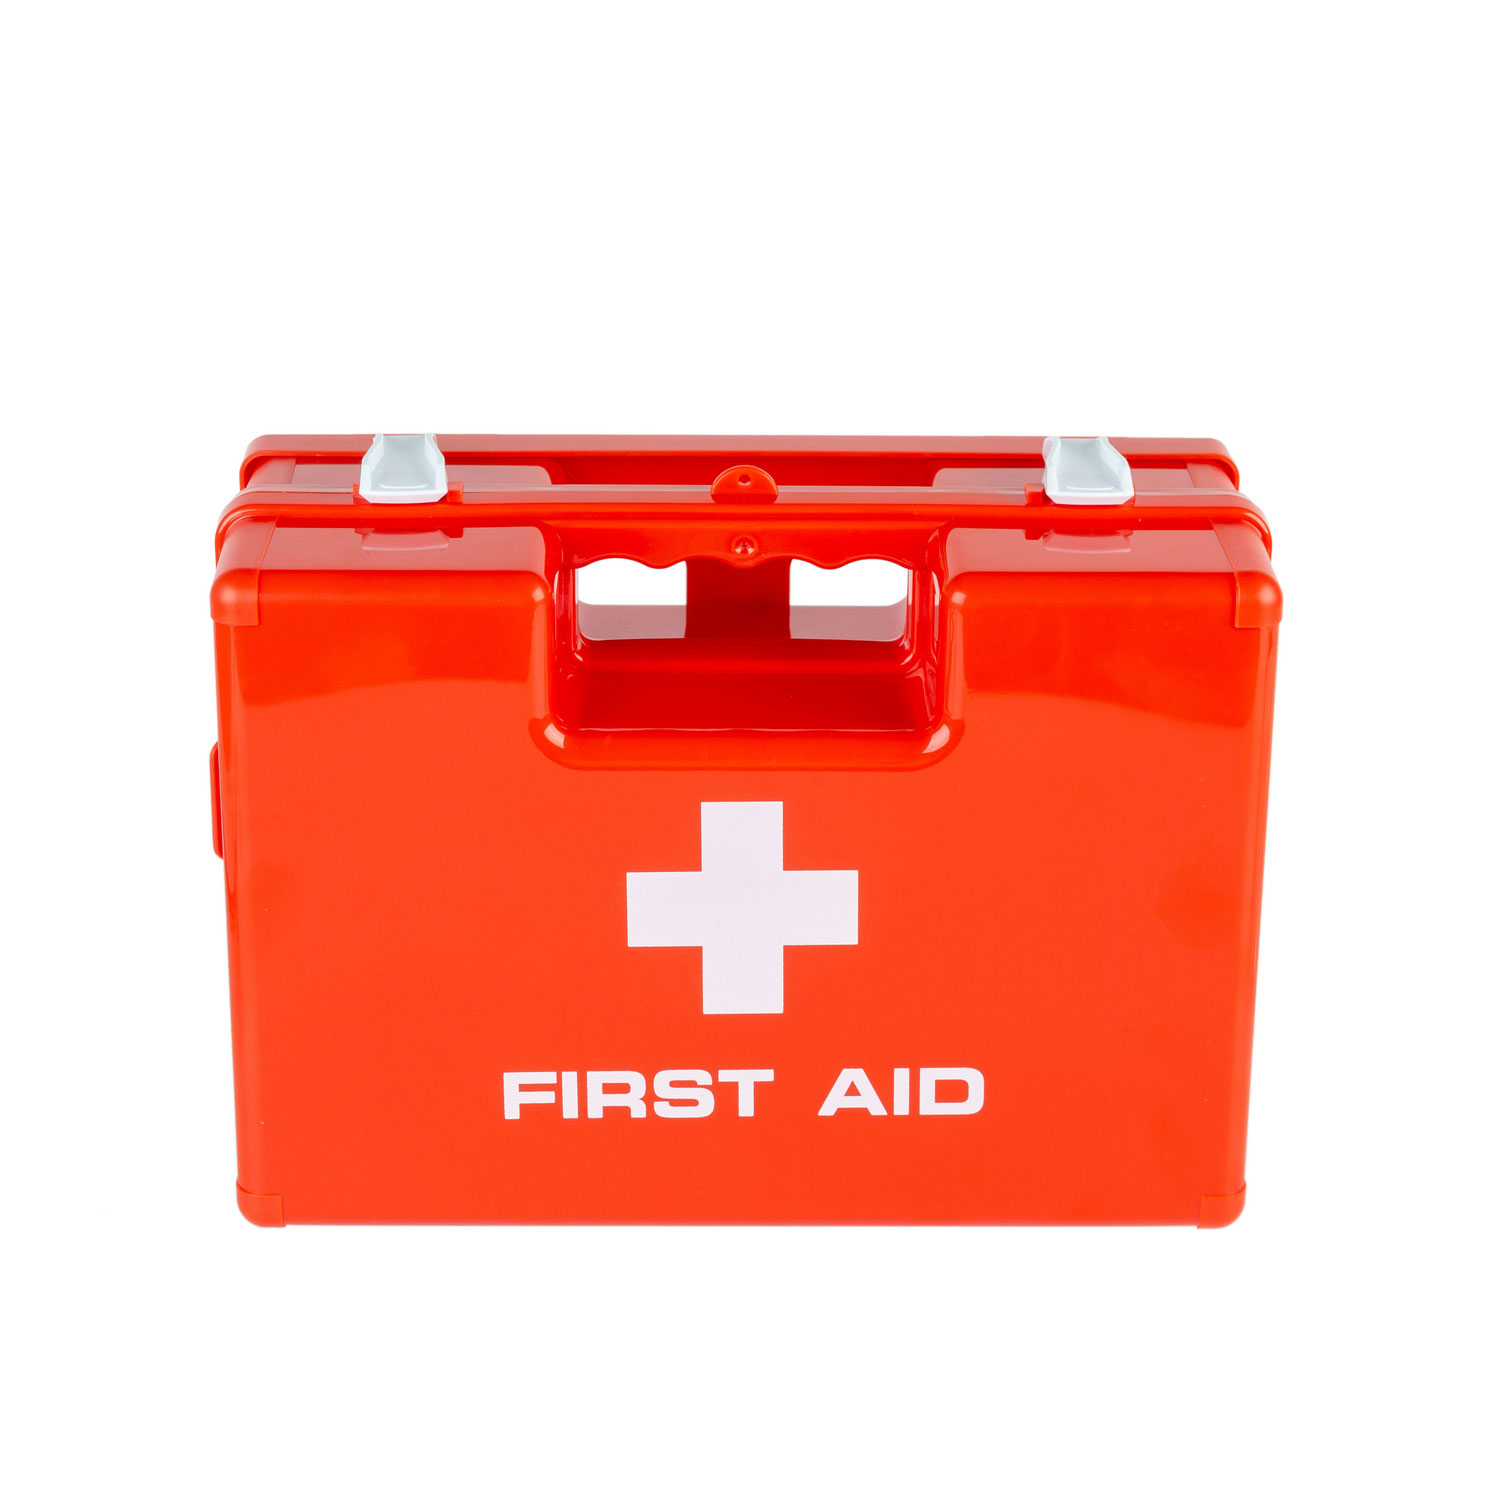 Community first aid kits